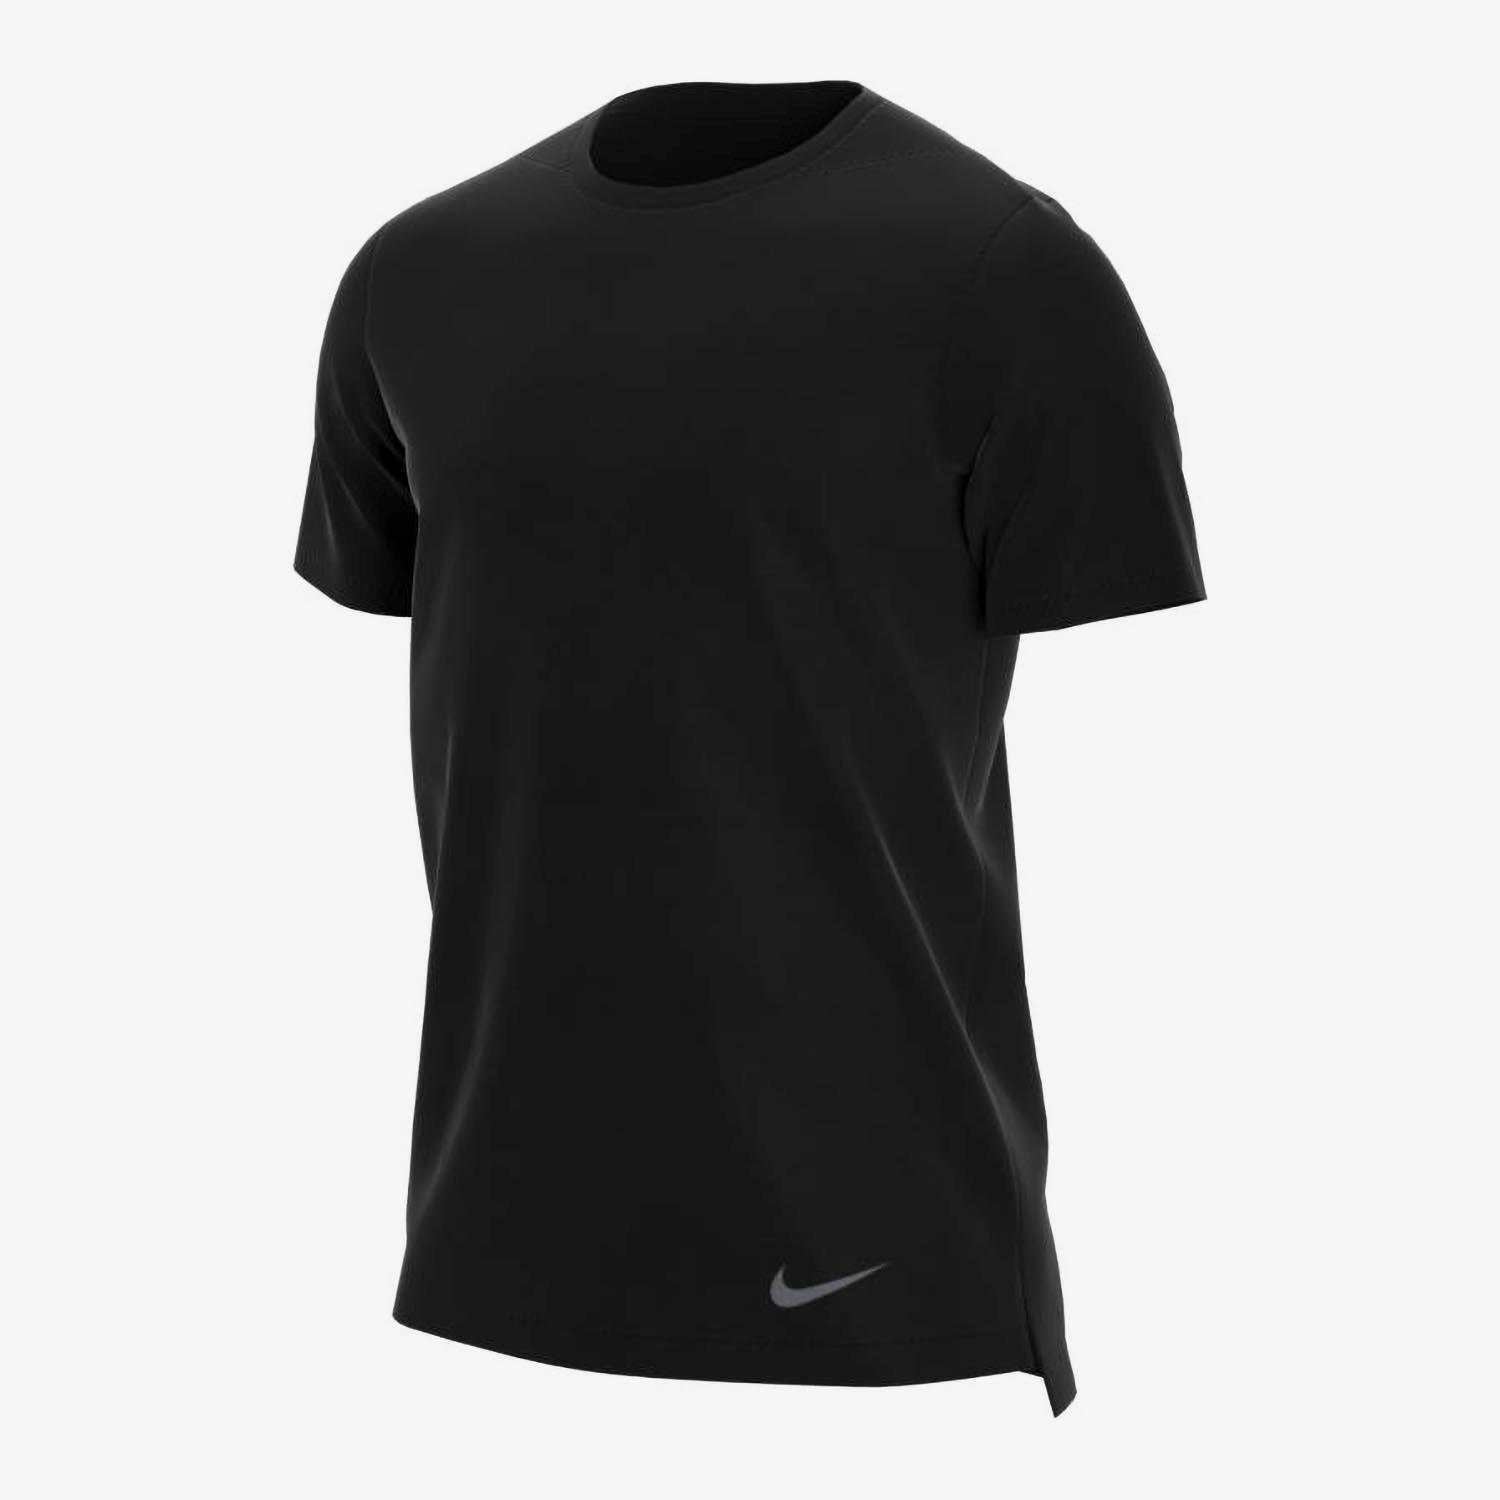 Nike Nike hardloopshirt zwart heren heren